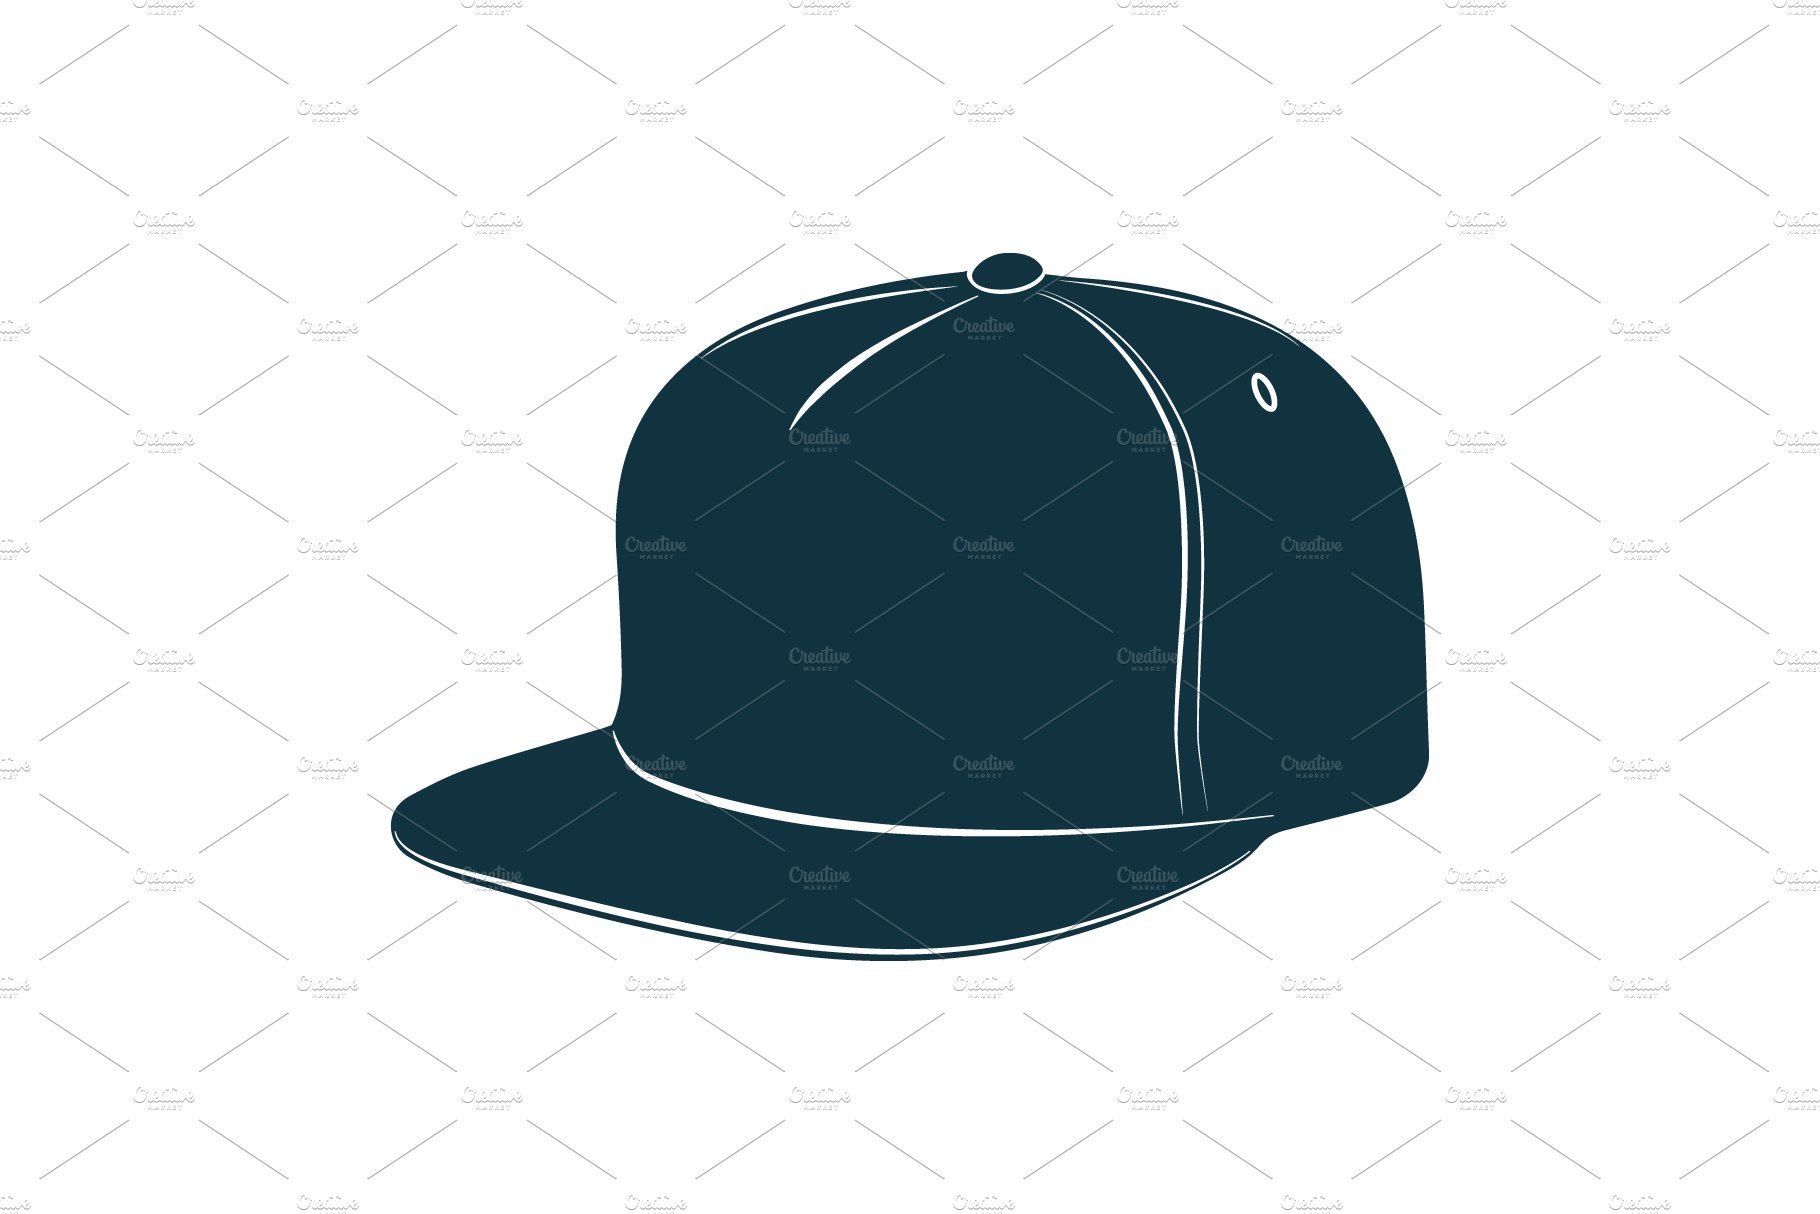 baseball cap visor headgear hat cover image.